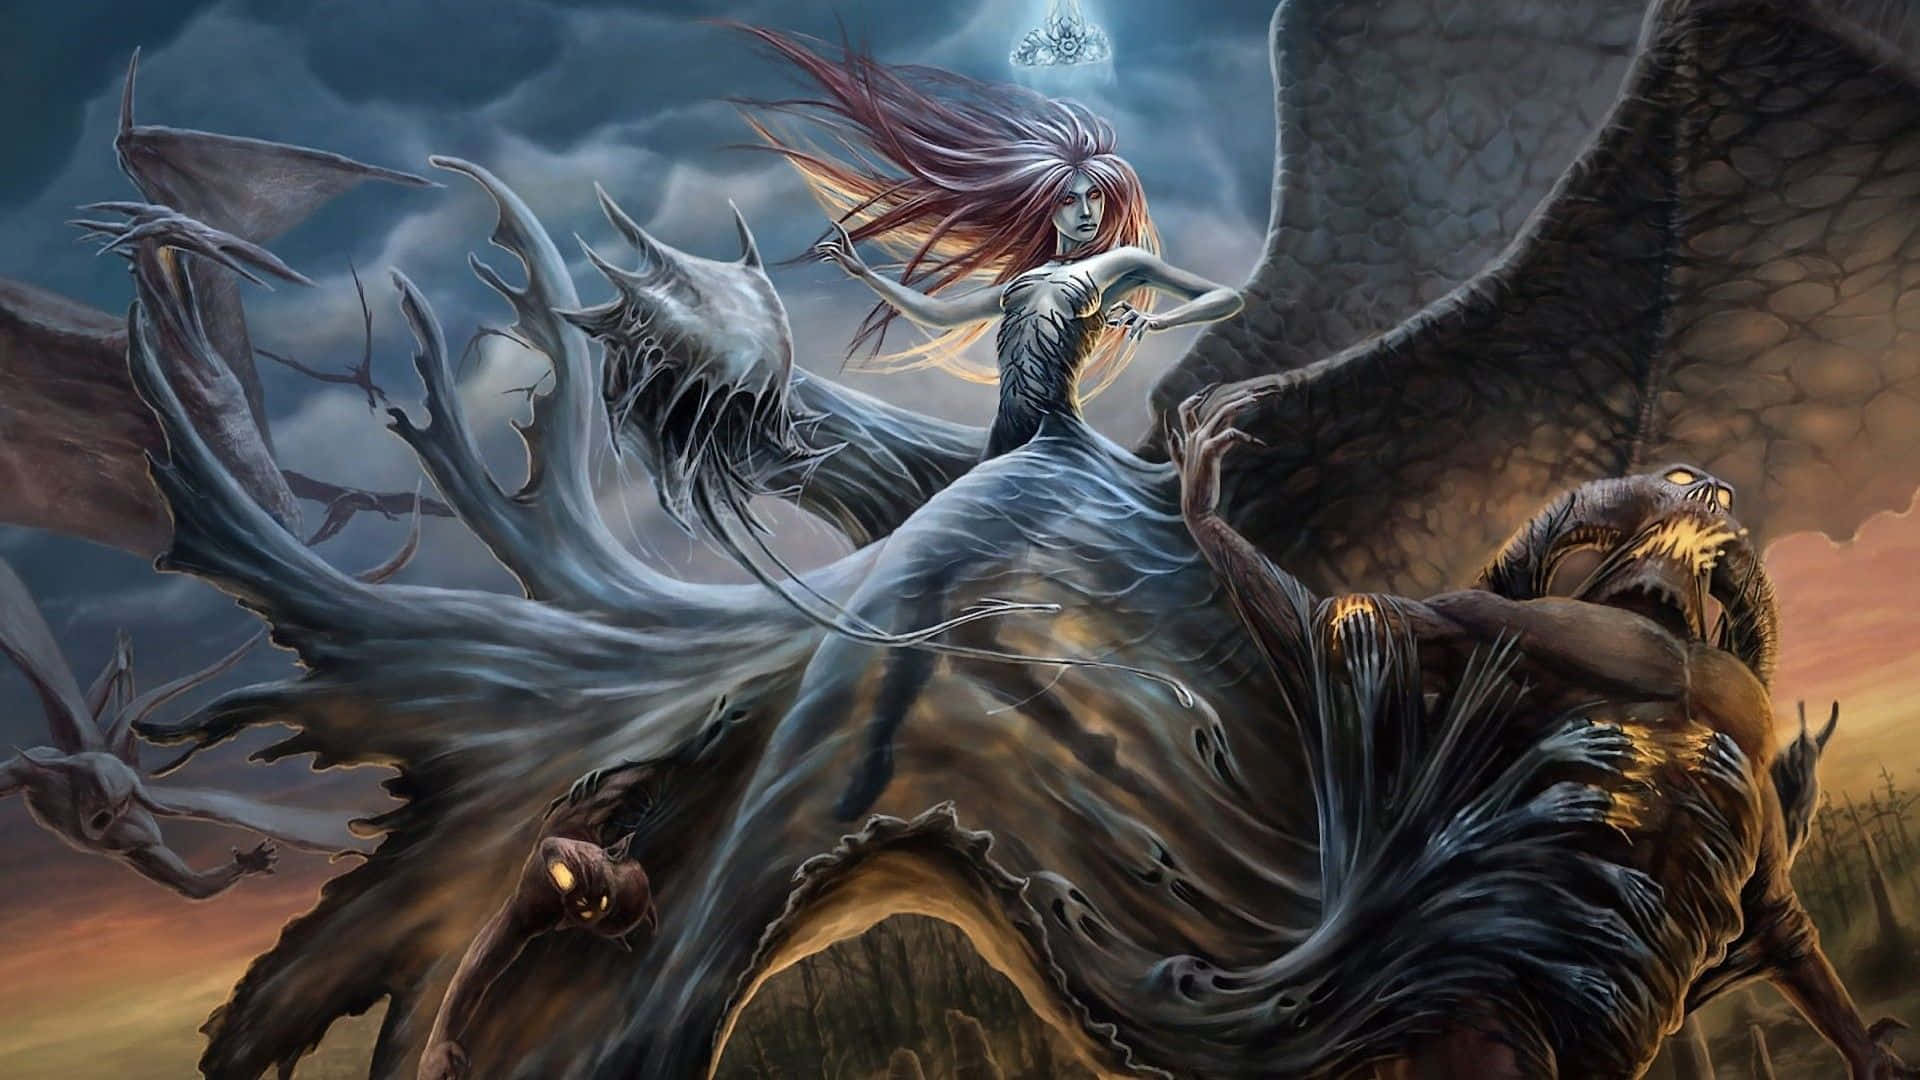 Mystical_ Sorceress_and_ Dragon_ Battle.jpg Wallpaper